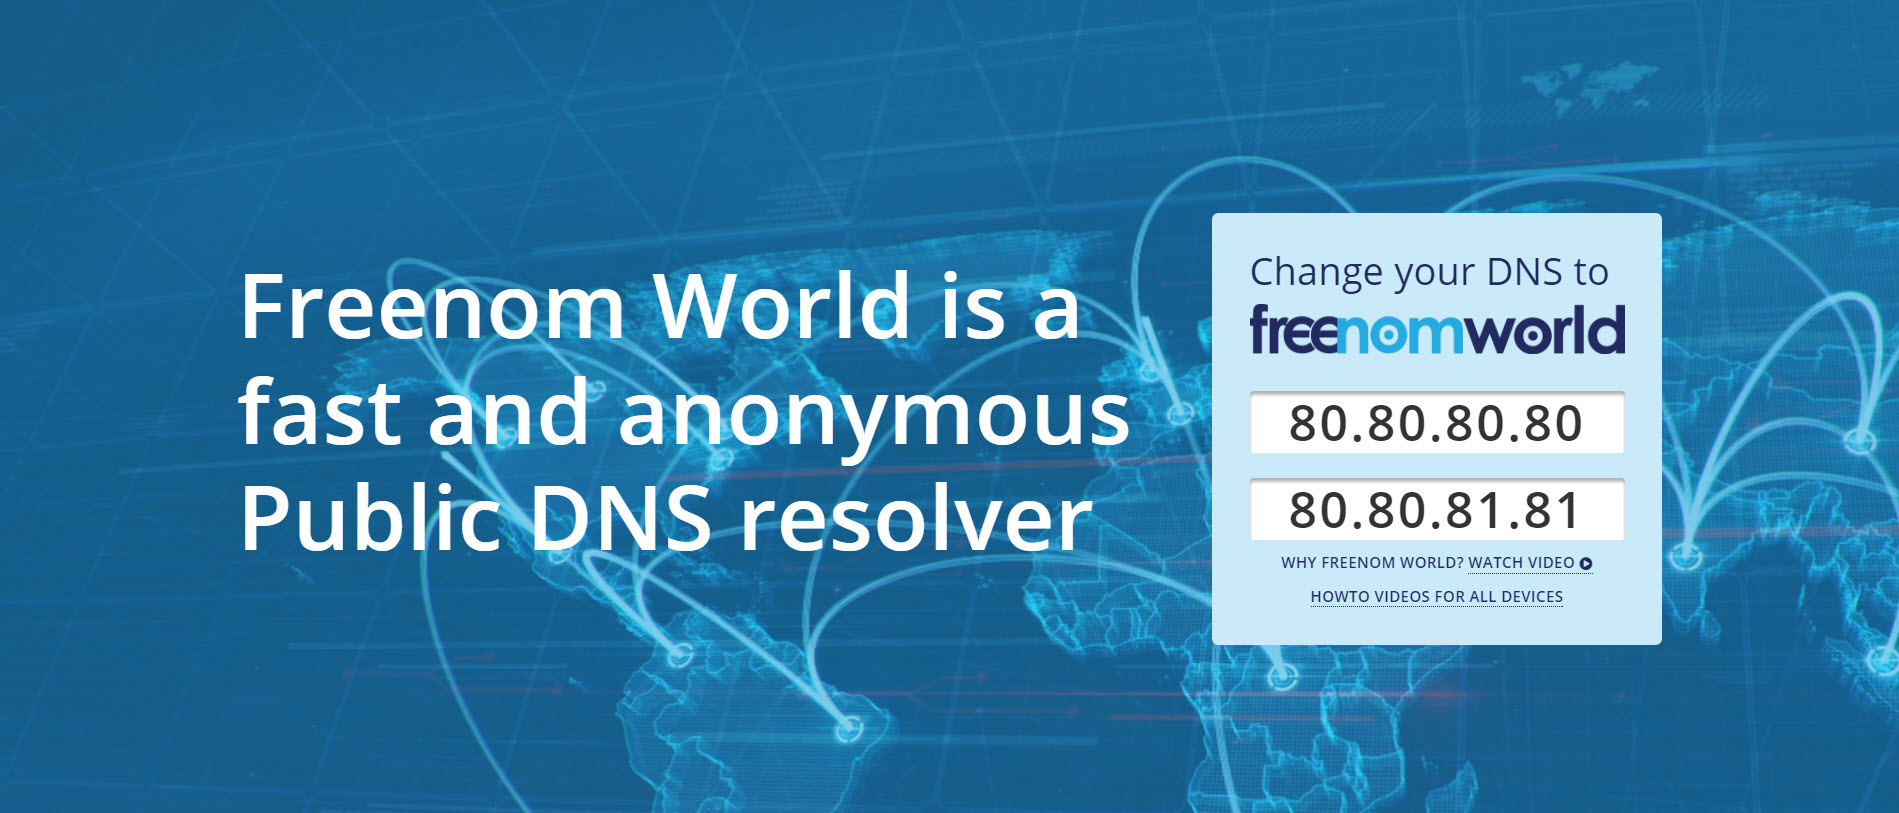 Freenom World ทางเลือกใหม่สำหรับบริการ DNS นอกจาก Google